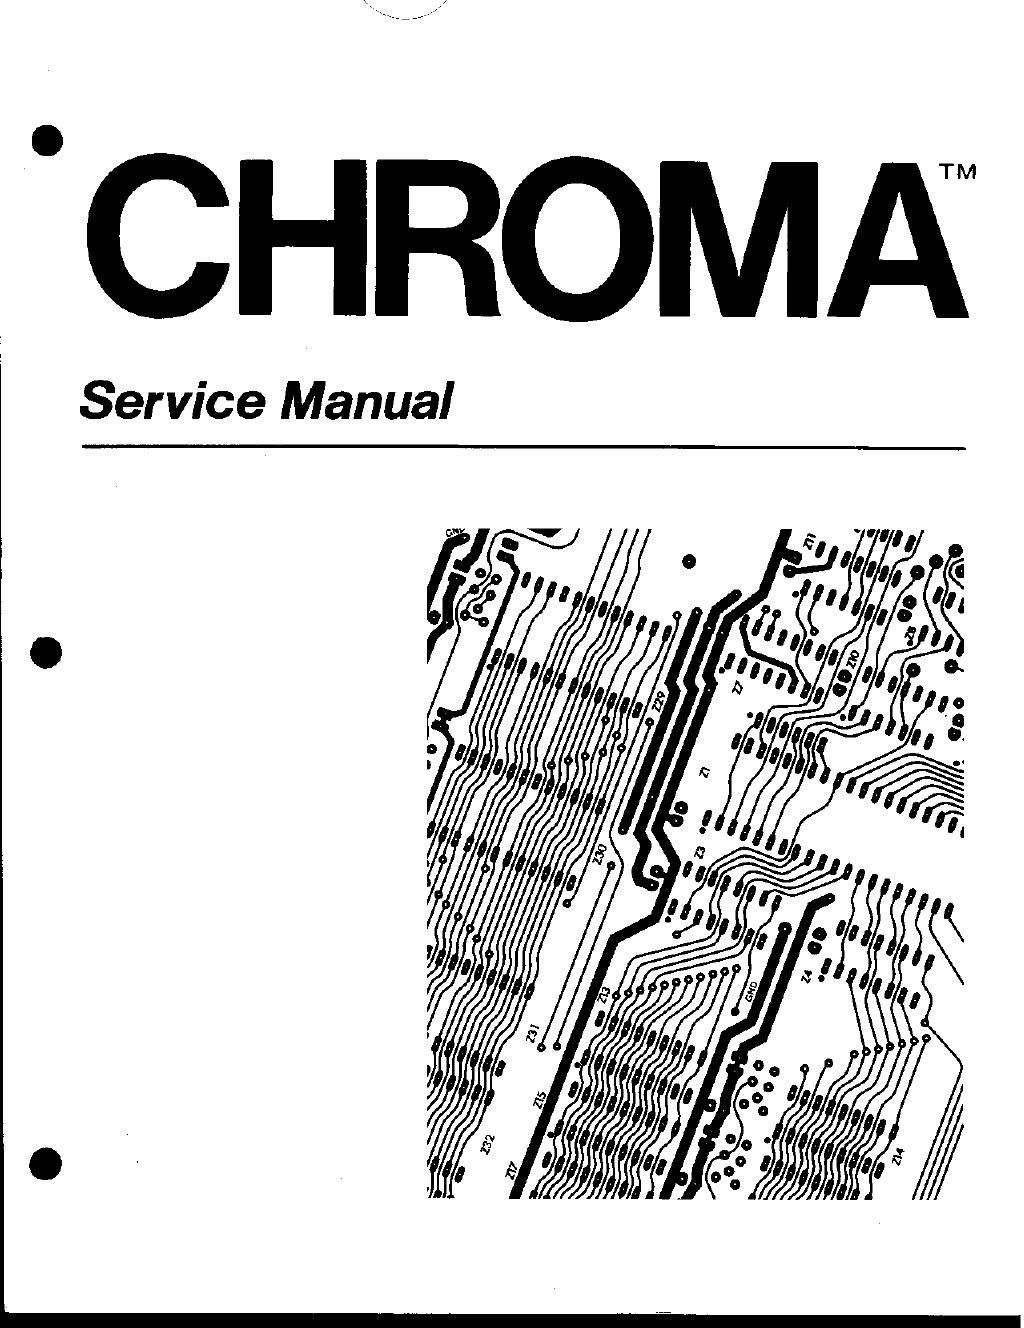 rhodes chroma service manual